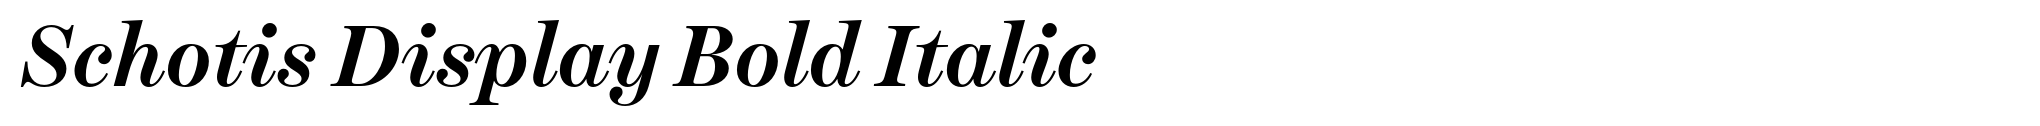 Schotis Display Bold Italic image